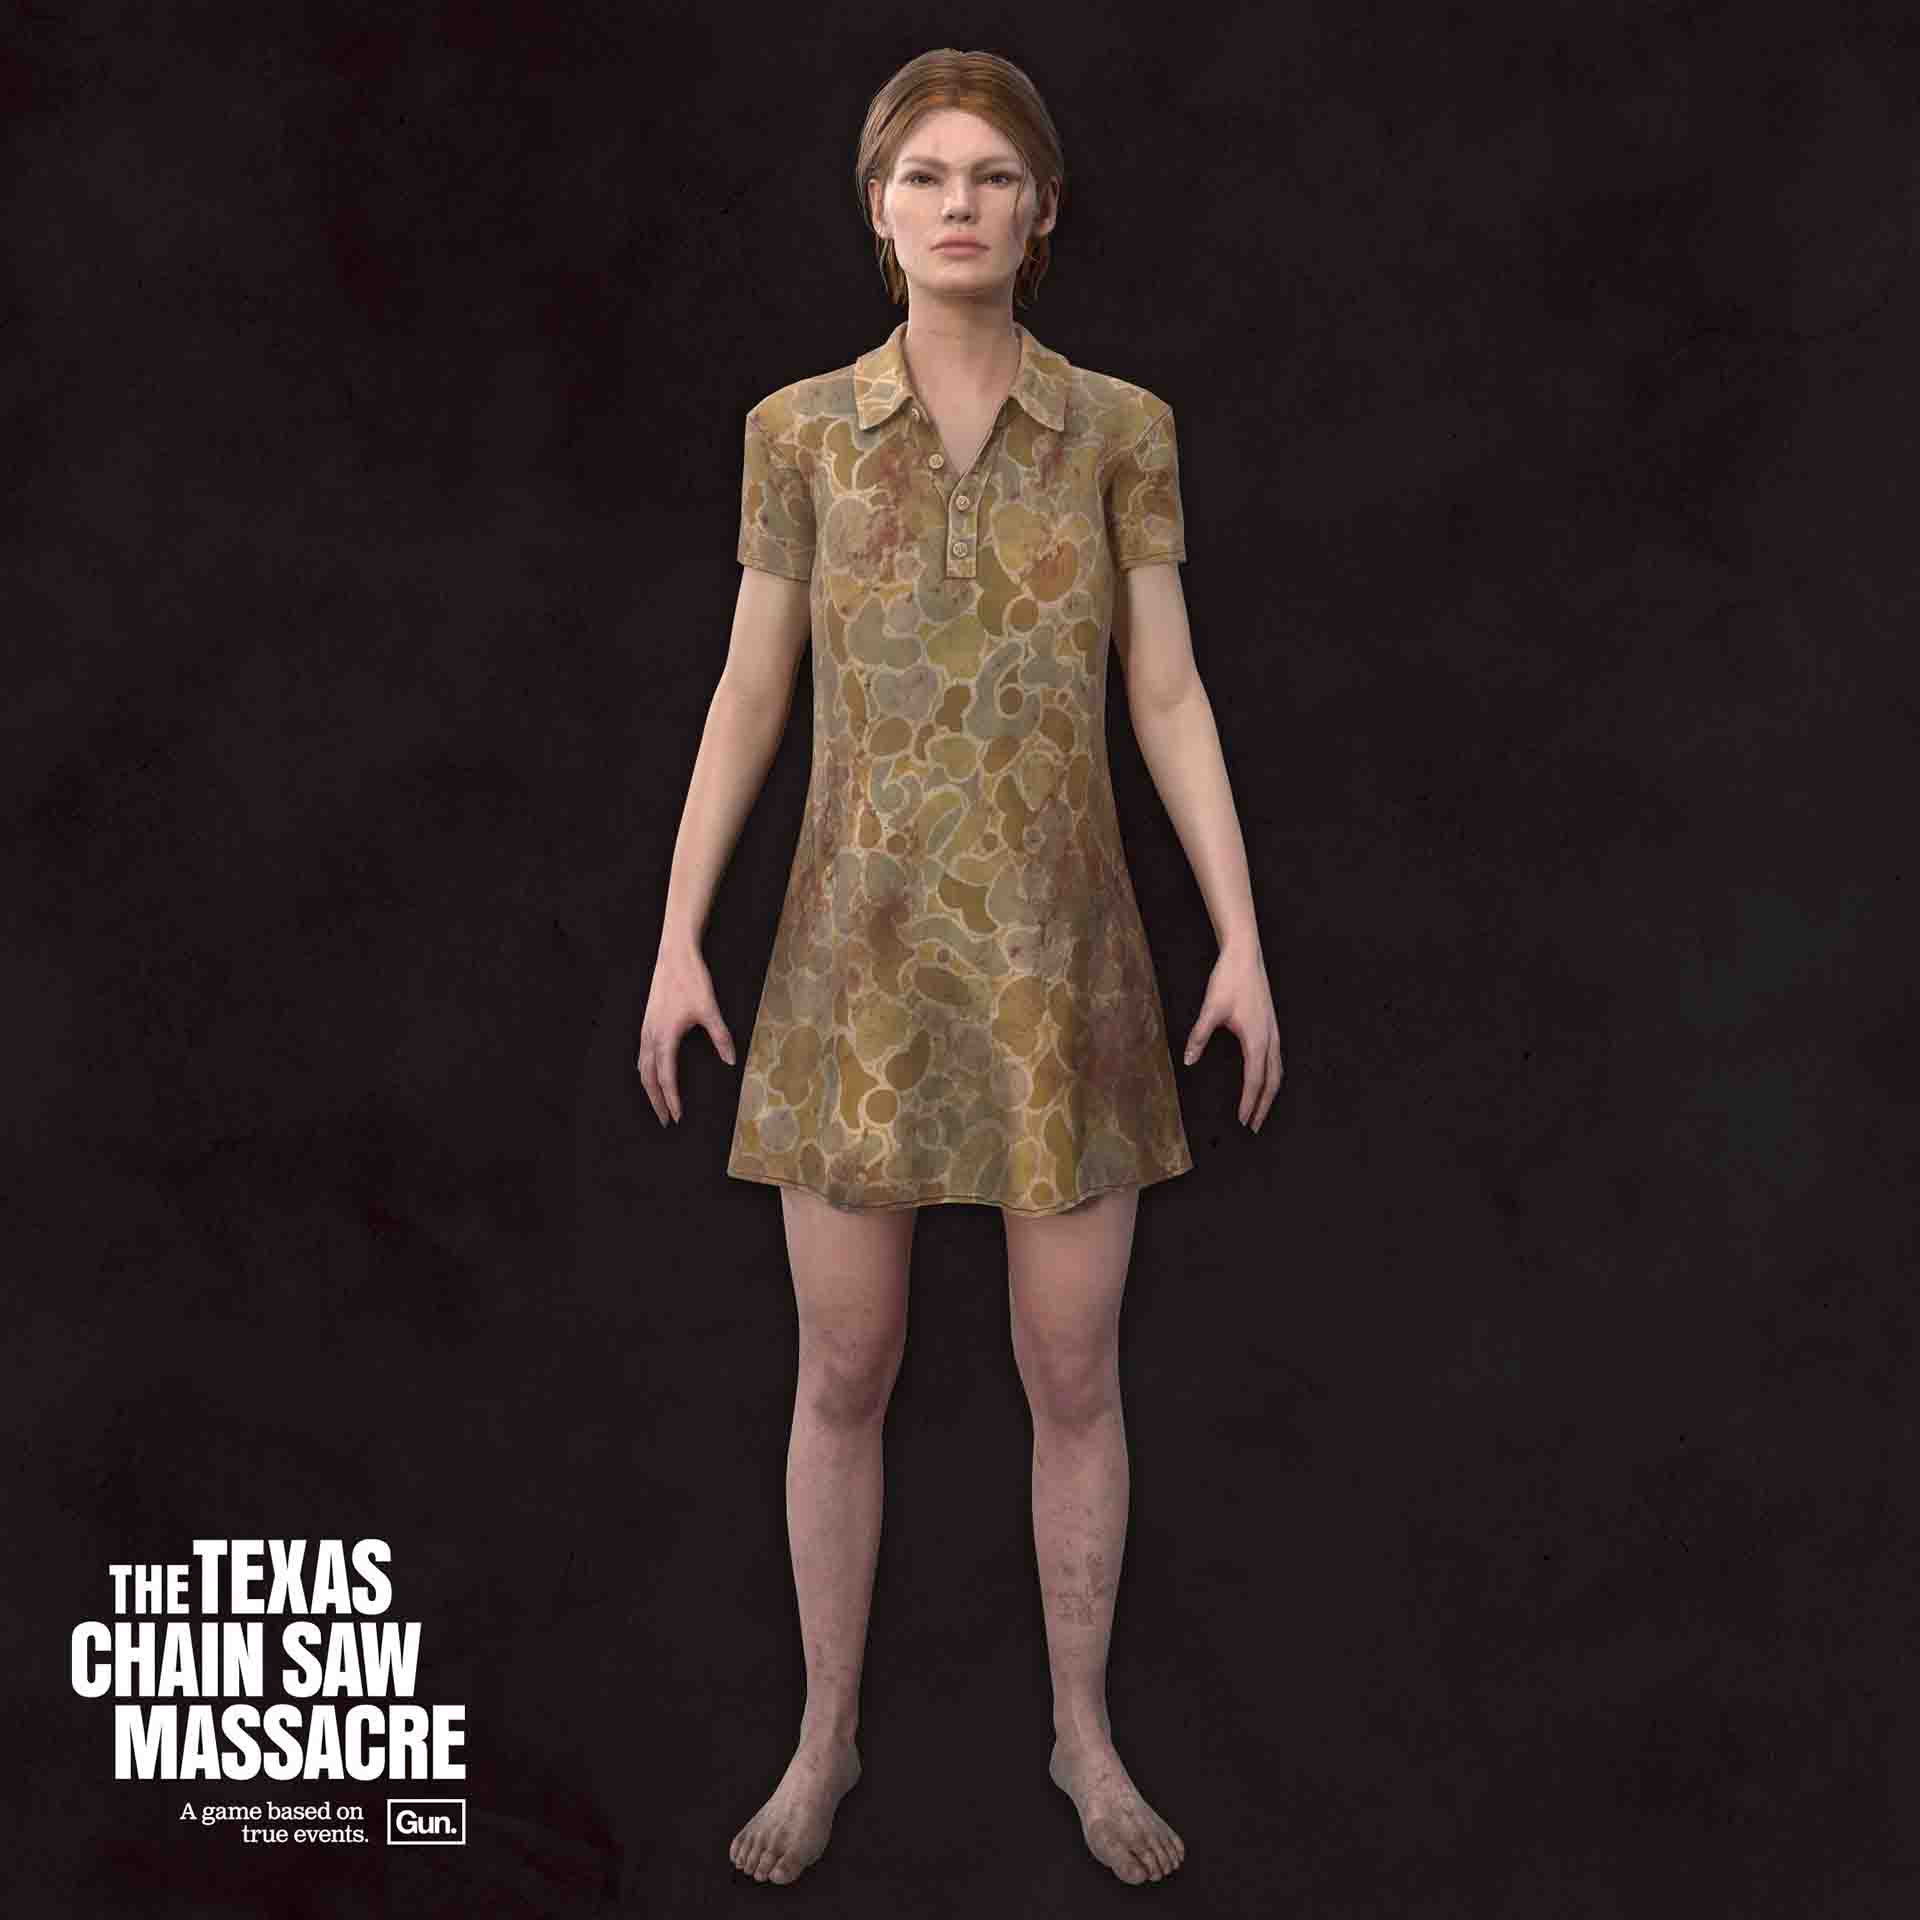 The Texas Chain Saw Massacre update